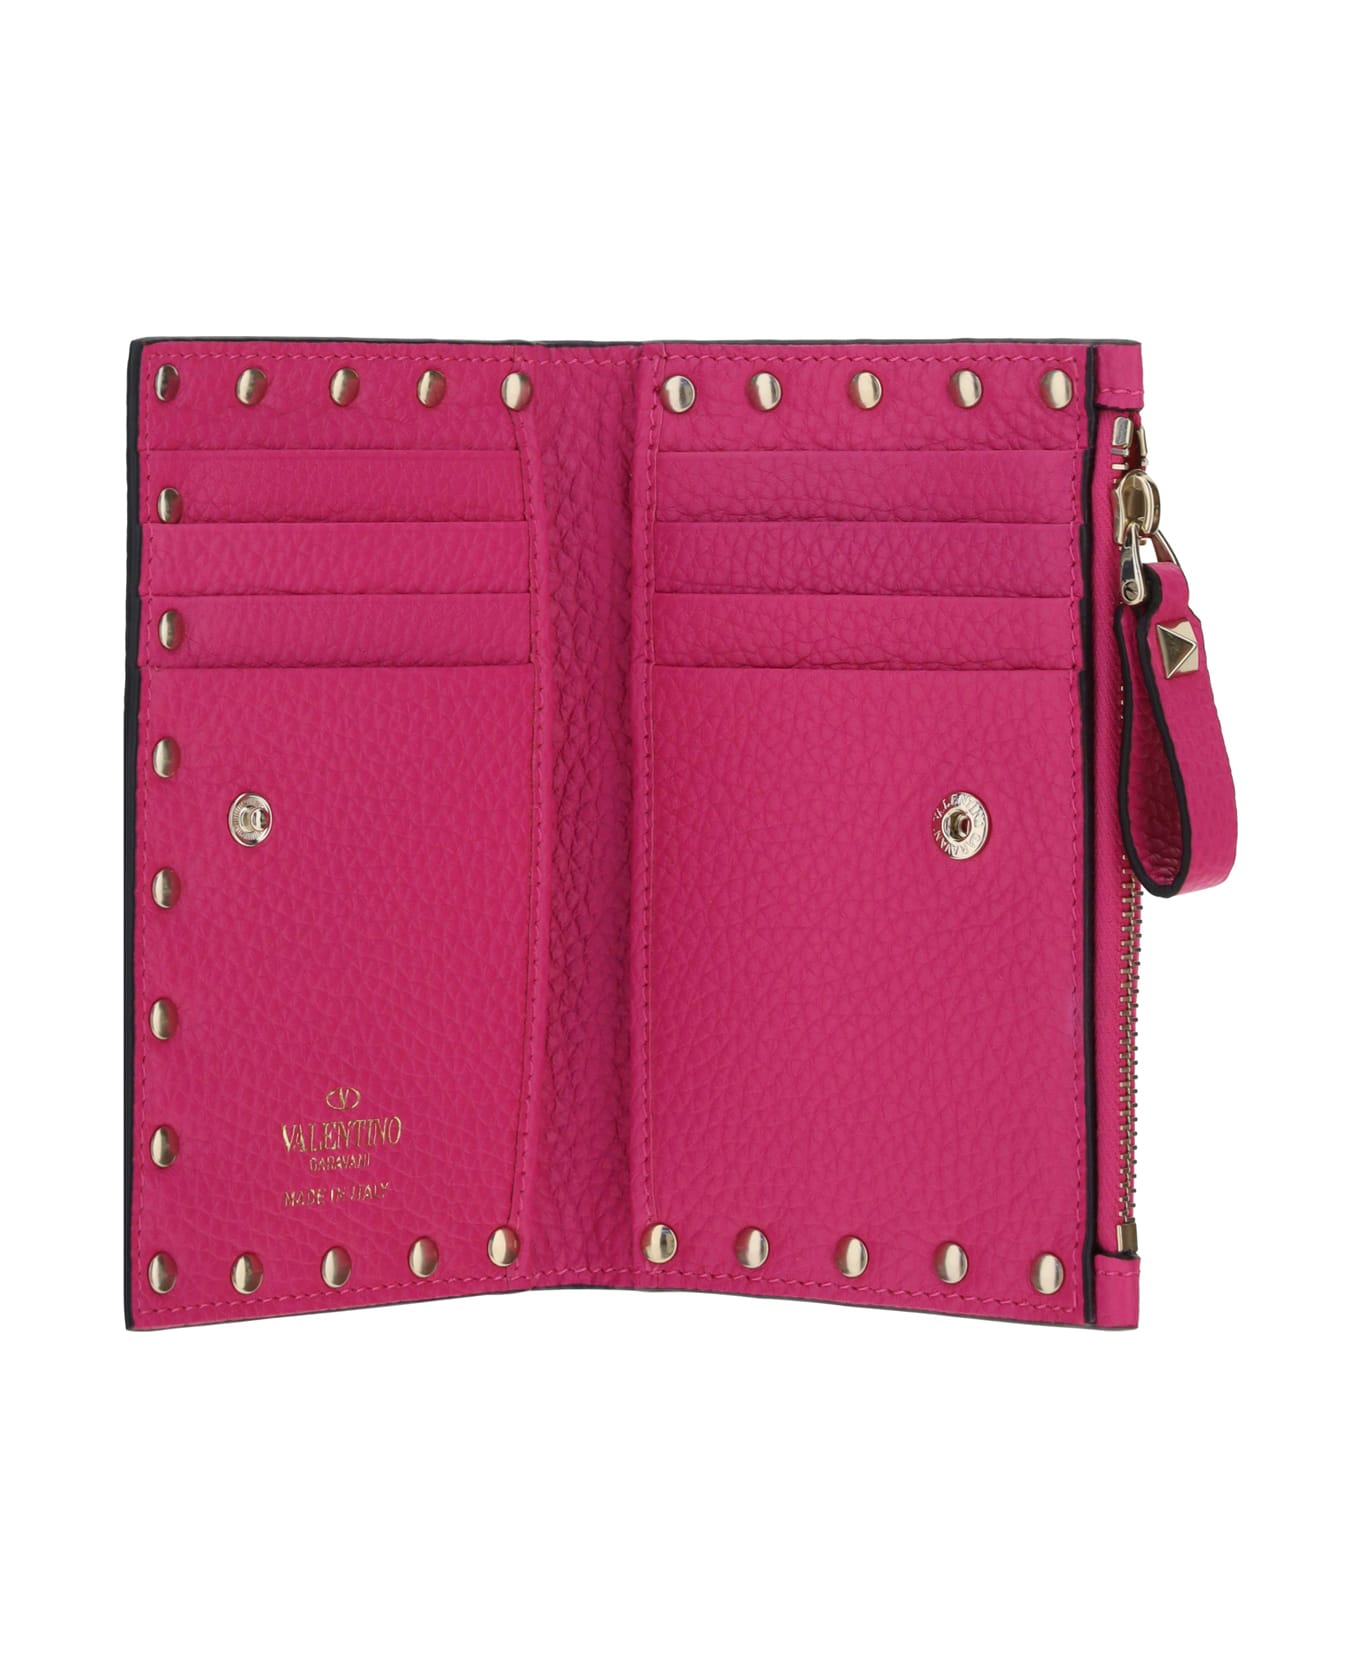 Valentino Garavani Rockstud French Wallet - Pink Pp